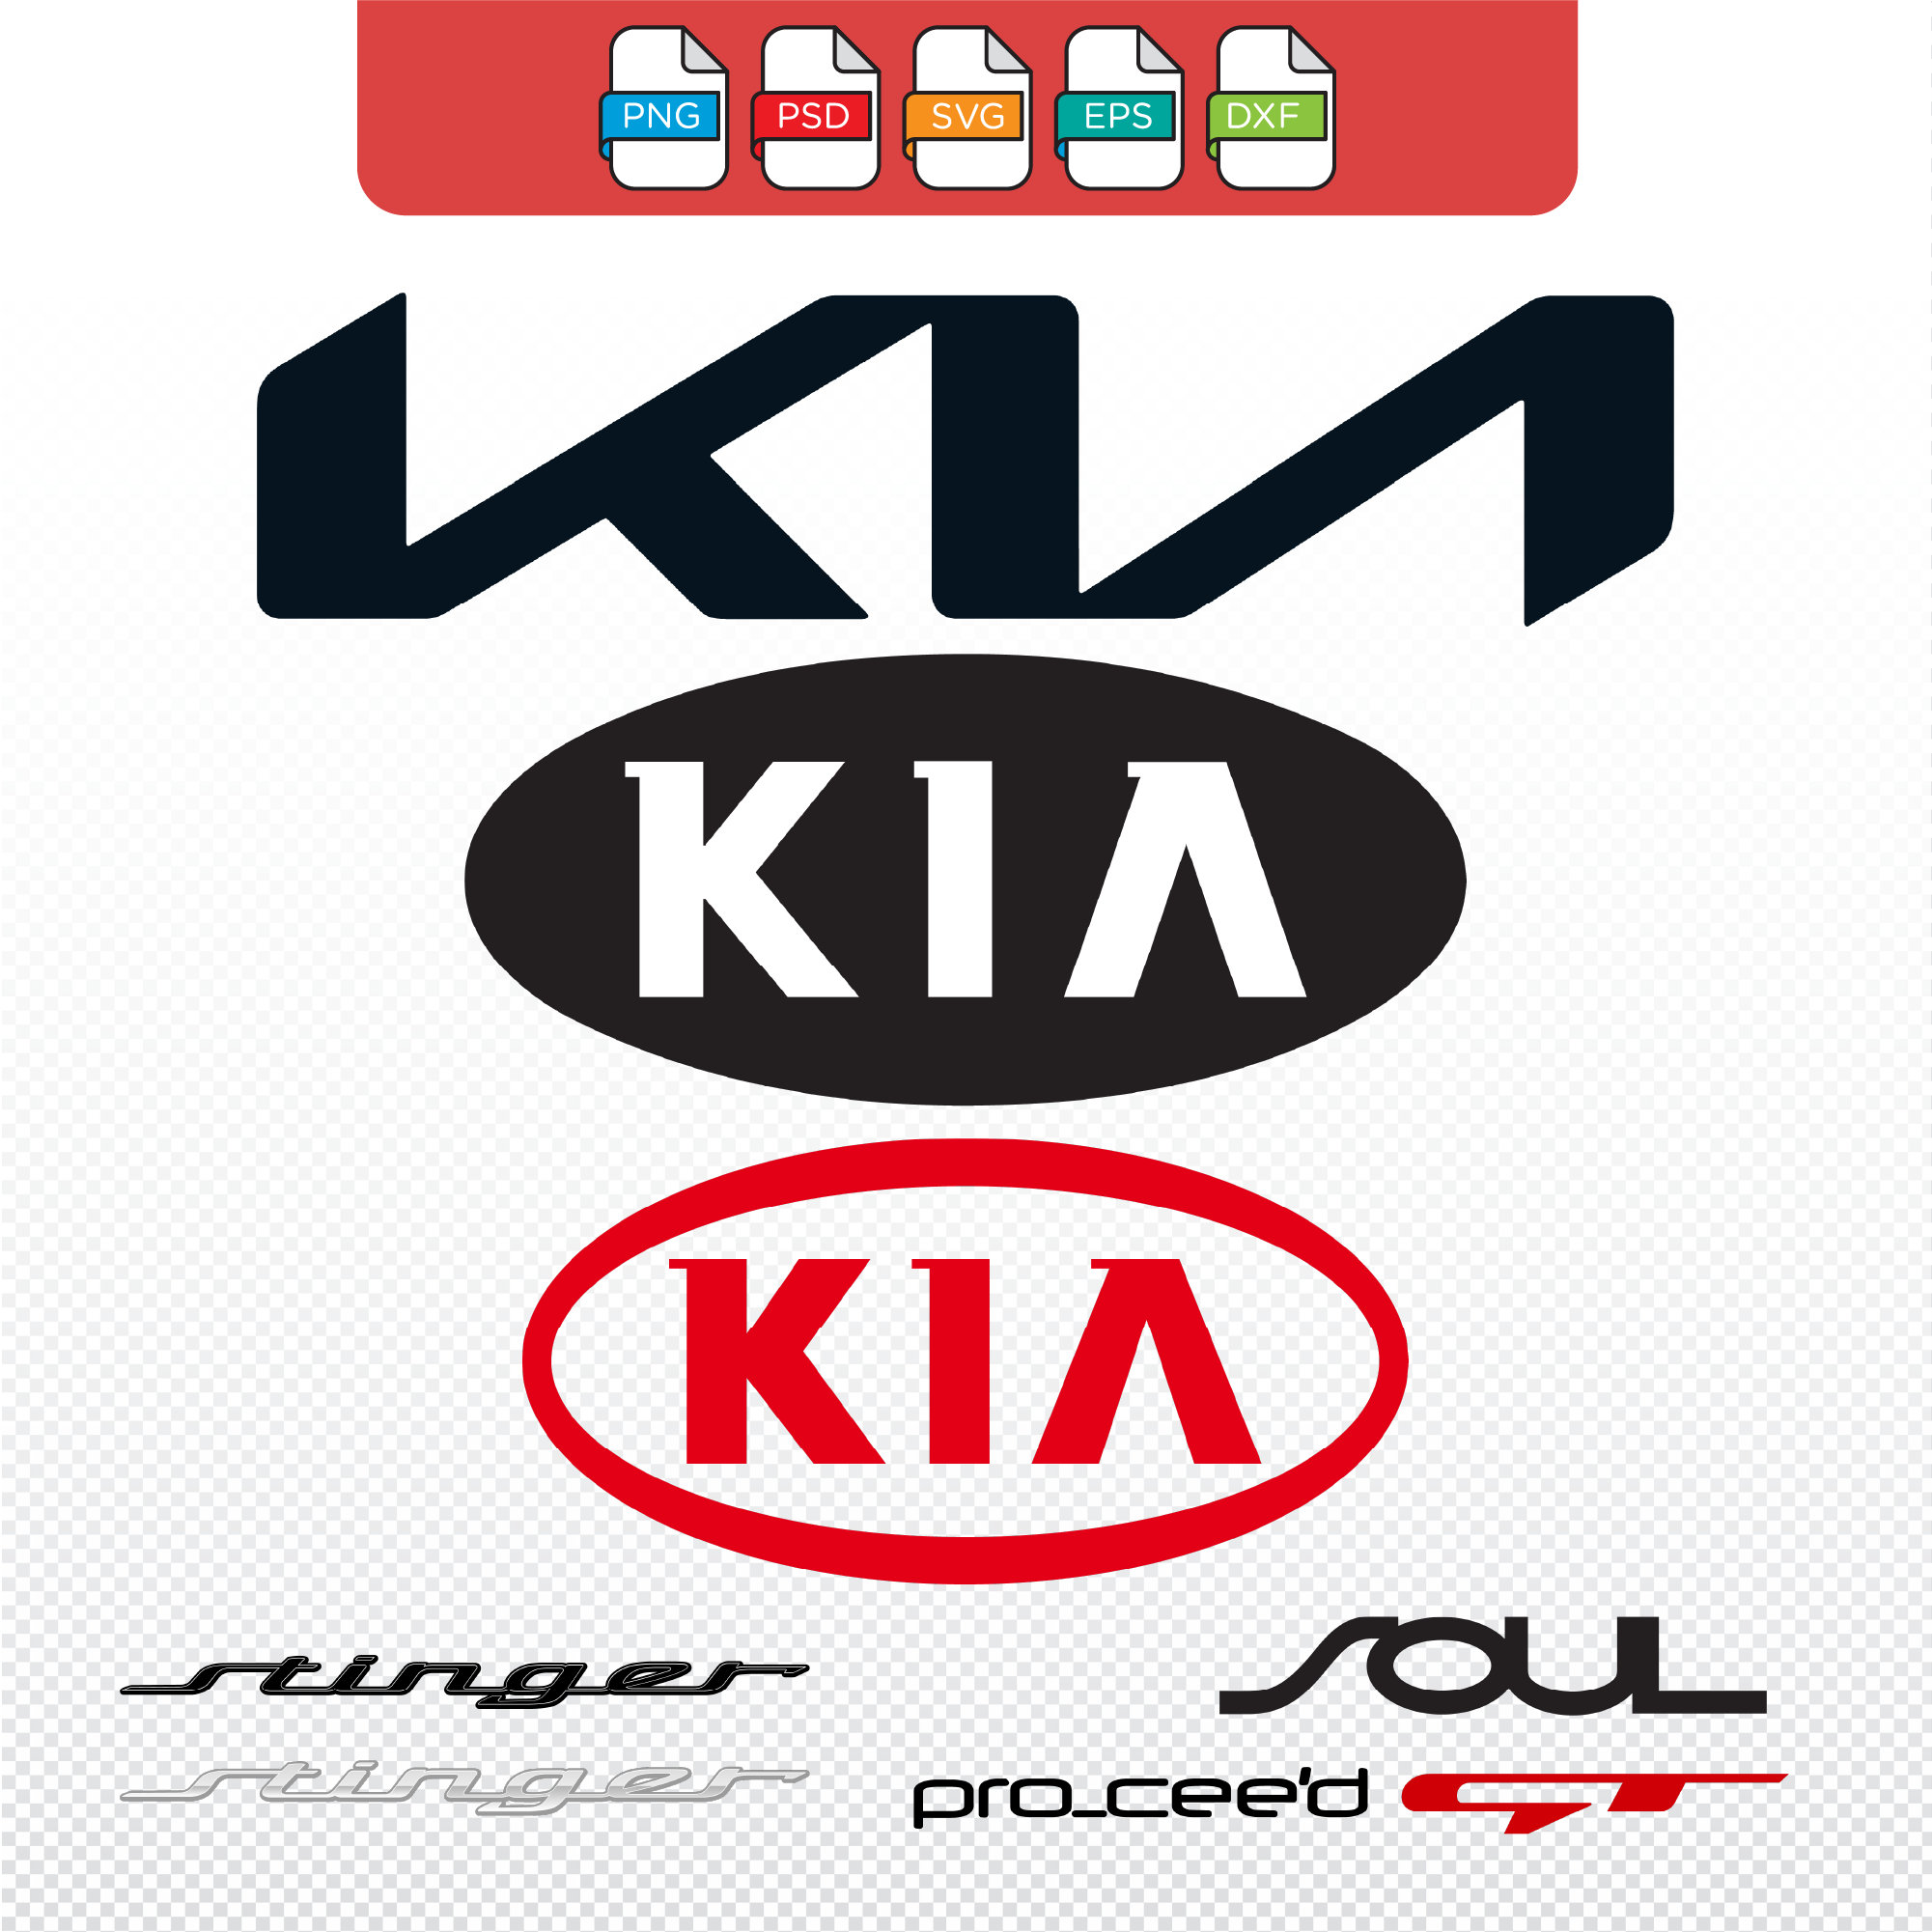 Kia Motors Logo Png Image Background - Emblem Transparent PNG - 500x252 -  Free Download on NicePNG